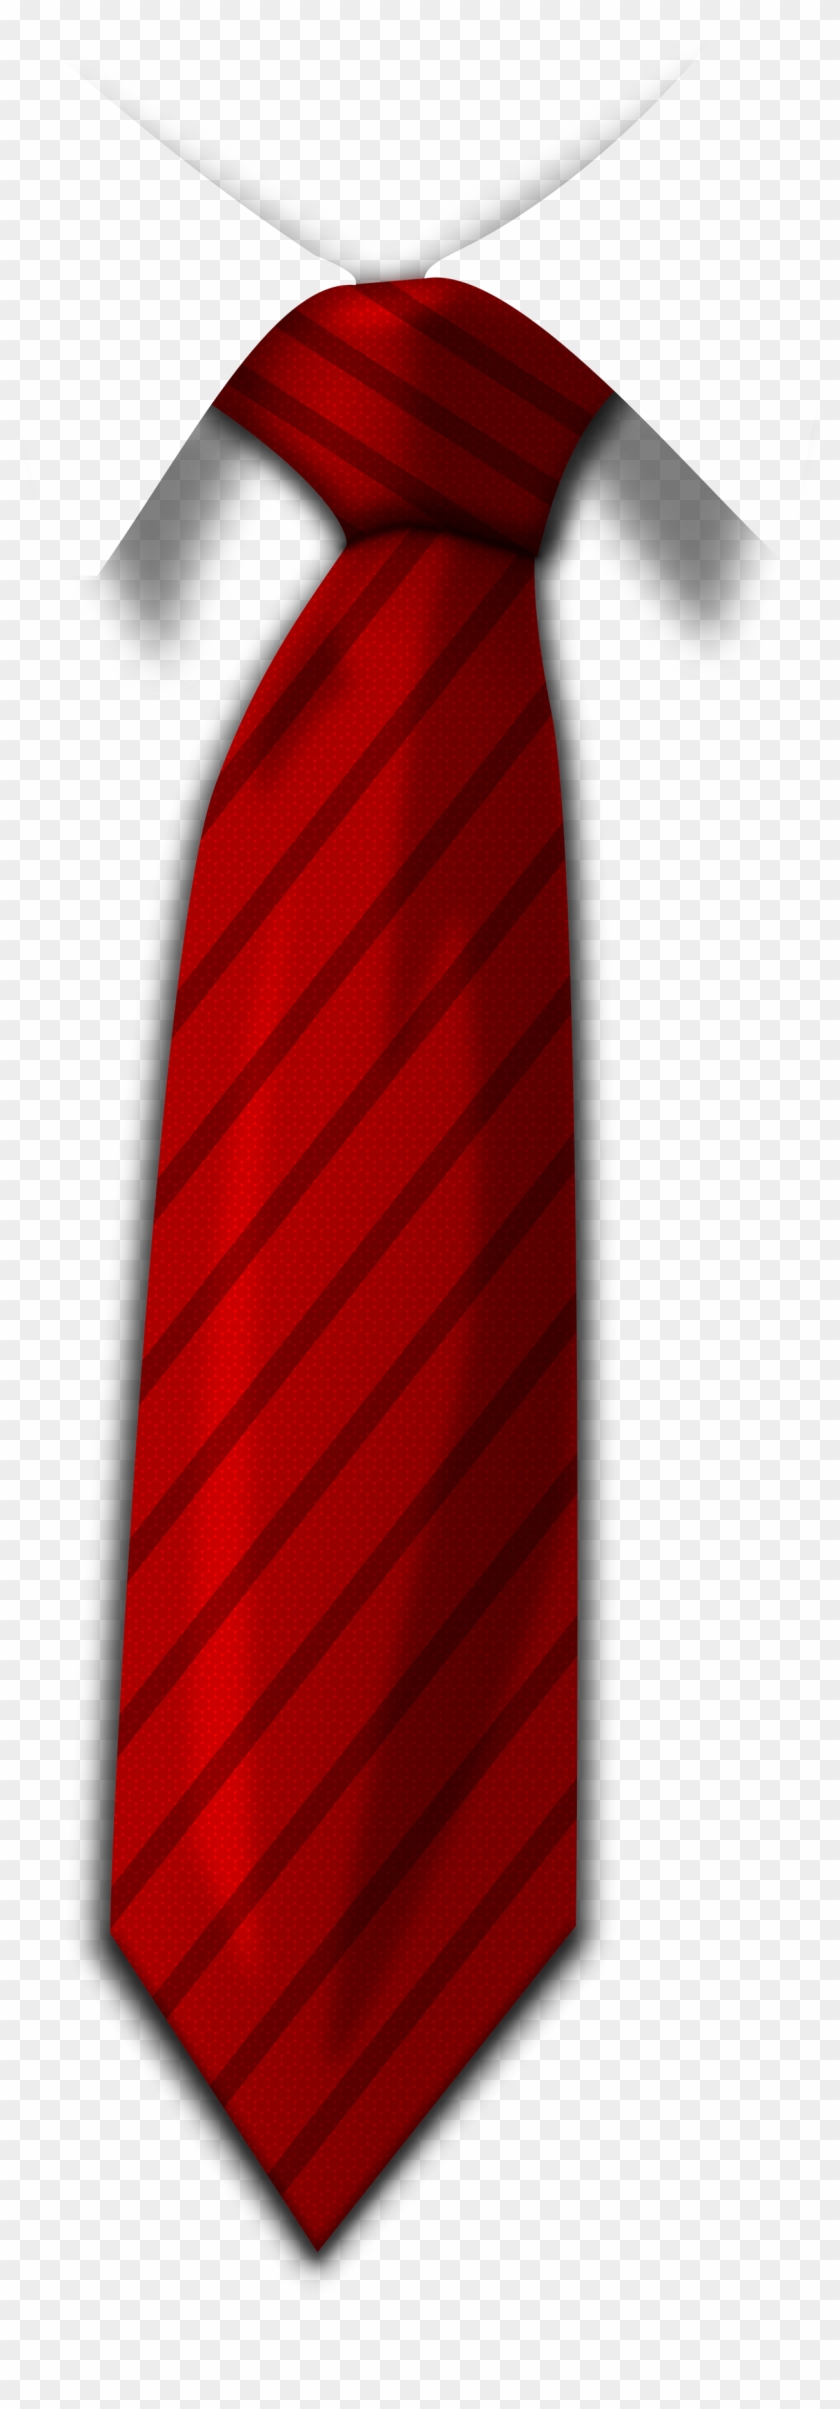 Red Tie Clipart - Red Necktie Png #554685